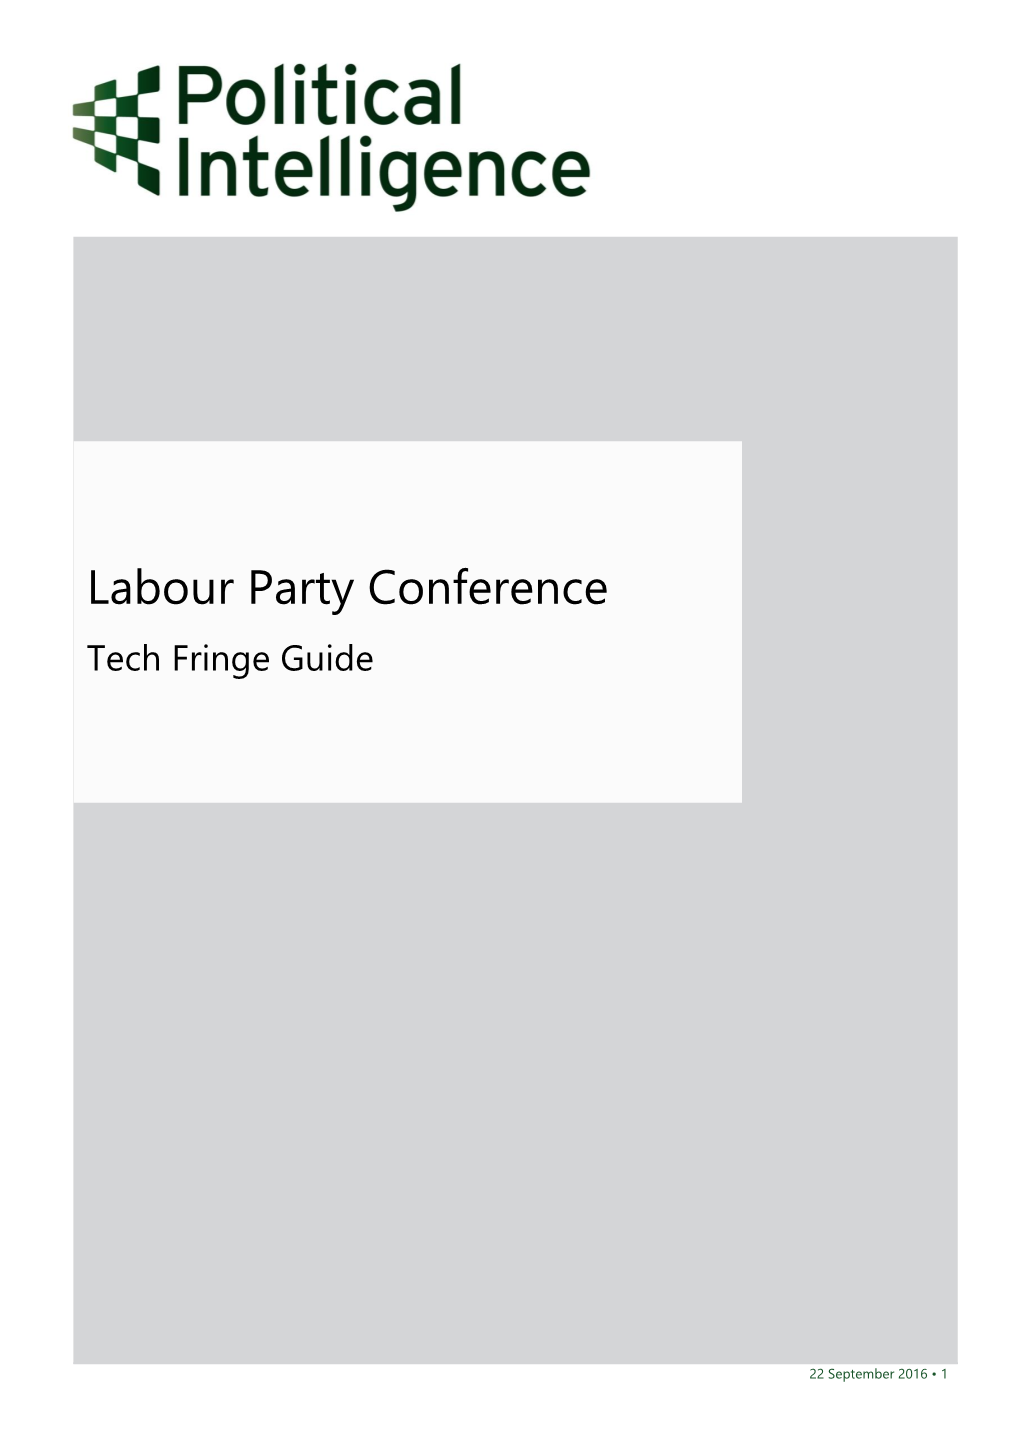 Labour Party Conference Tech Fringe Guide